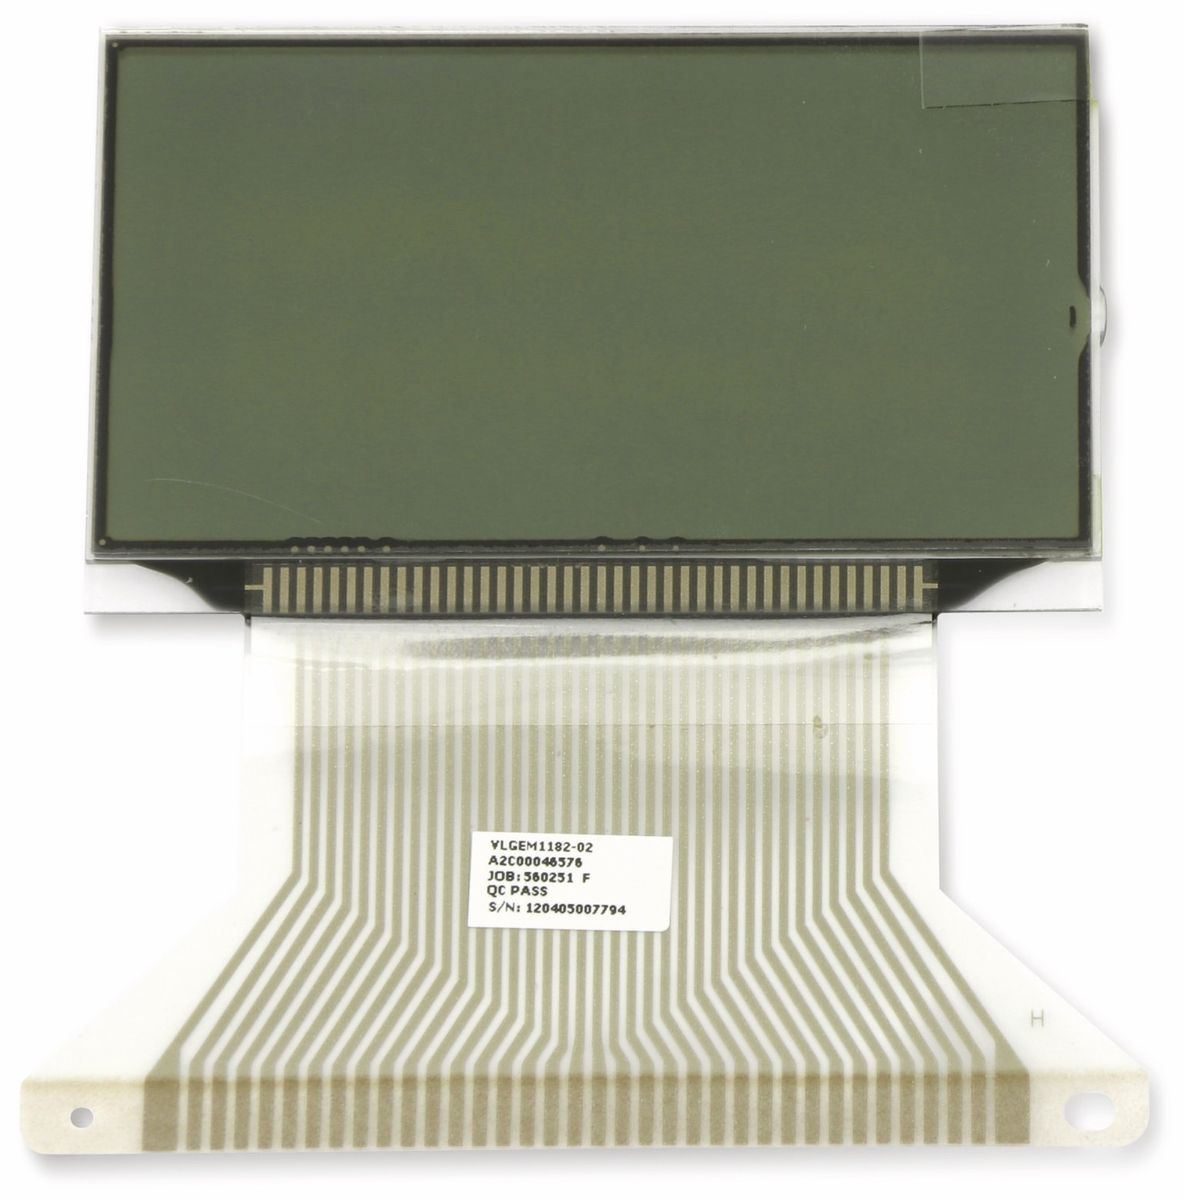 VARITRONIX LCD-Modul VLGEM1182-02 von VARITRONIX